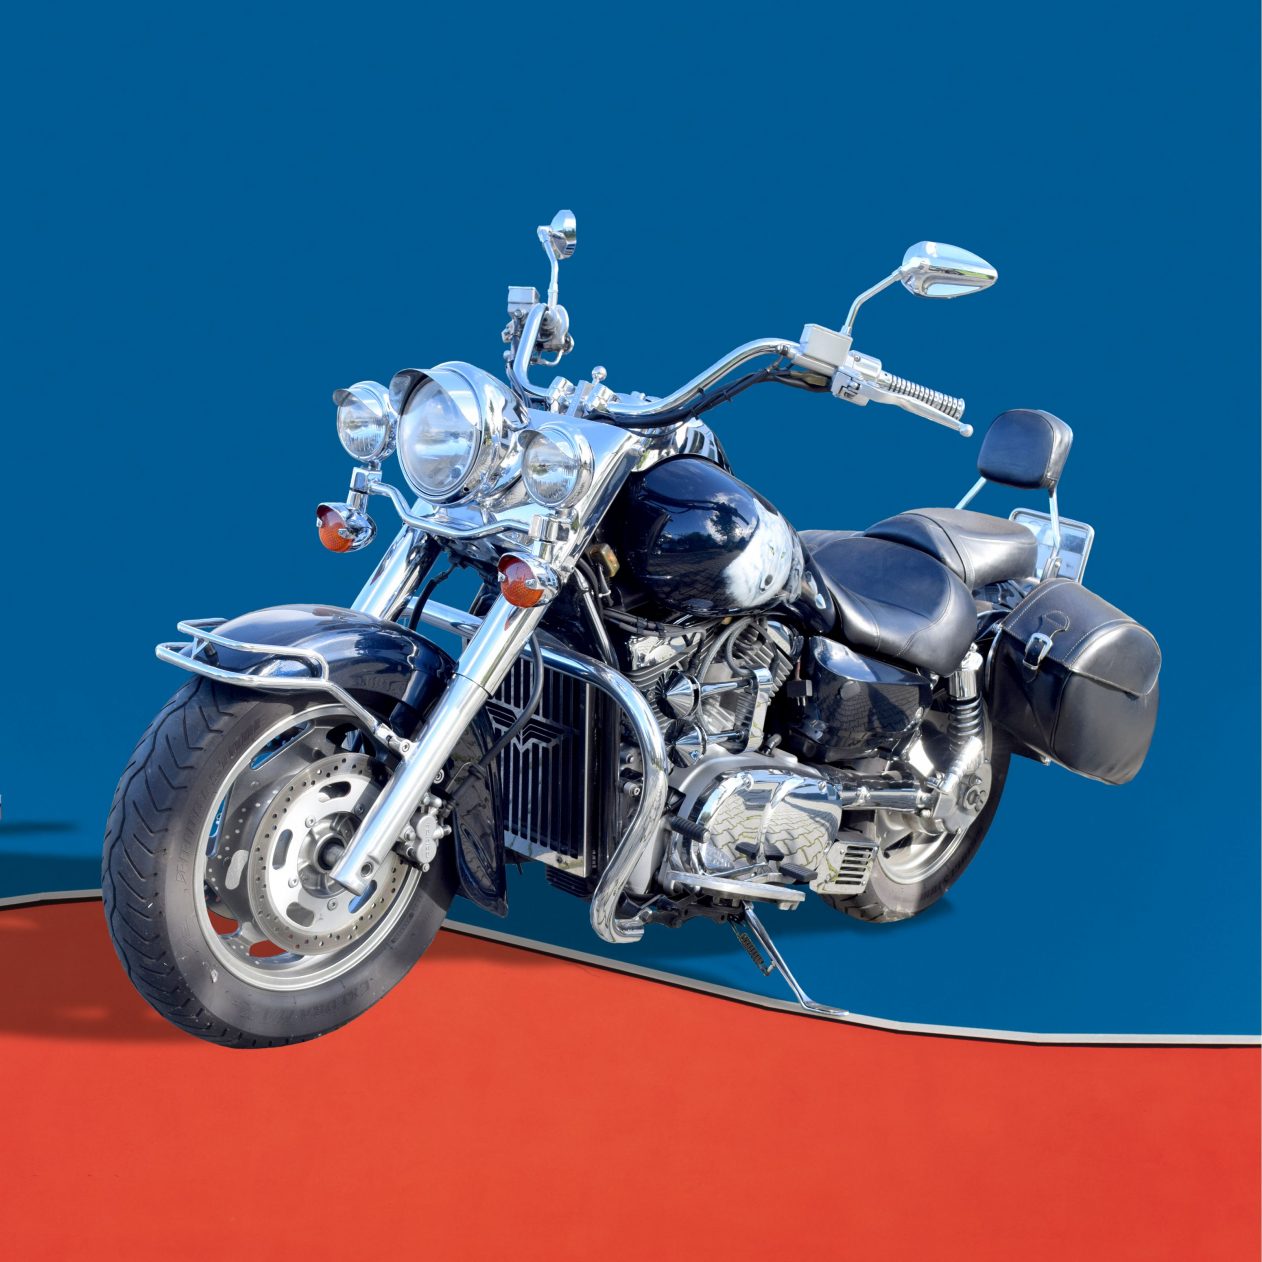 1262x1262 Parallax wallpaper 4k Motorbike Blue Dividing Red Ipad Wallpaper 1262x1262 pixels resolution